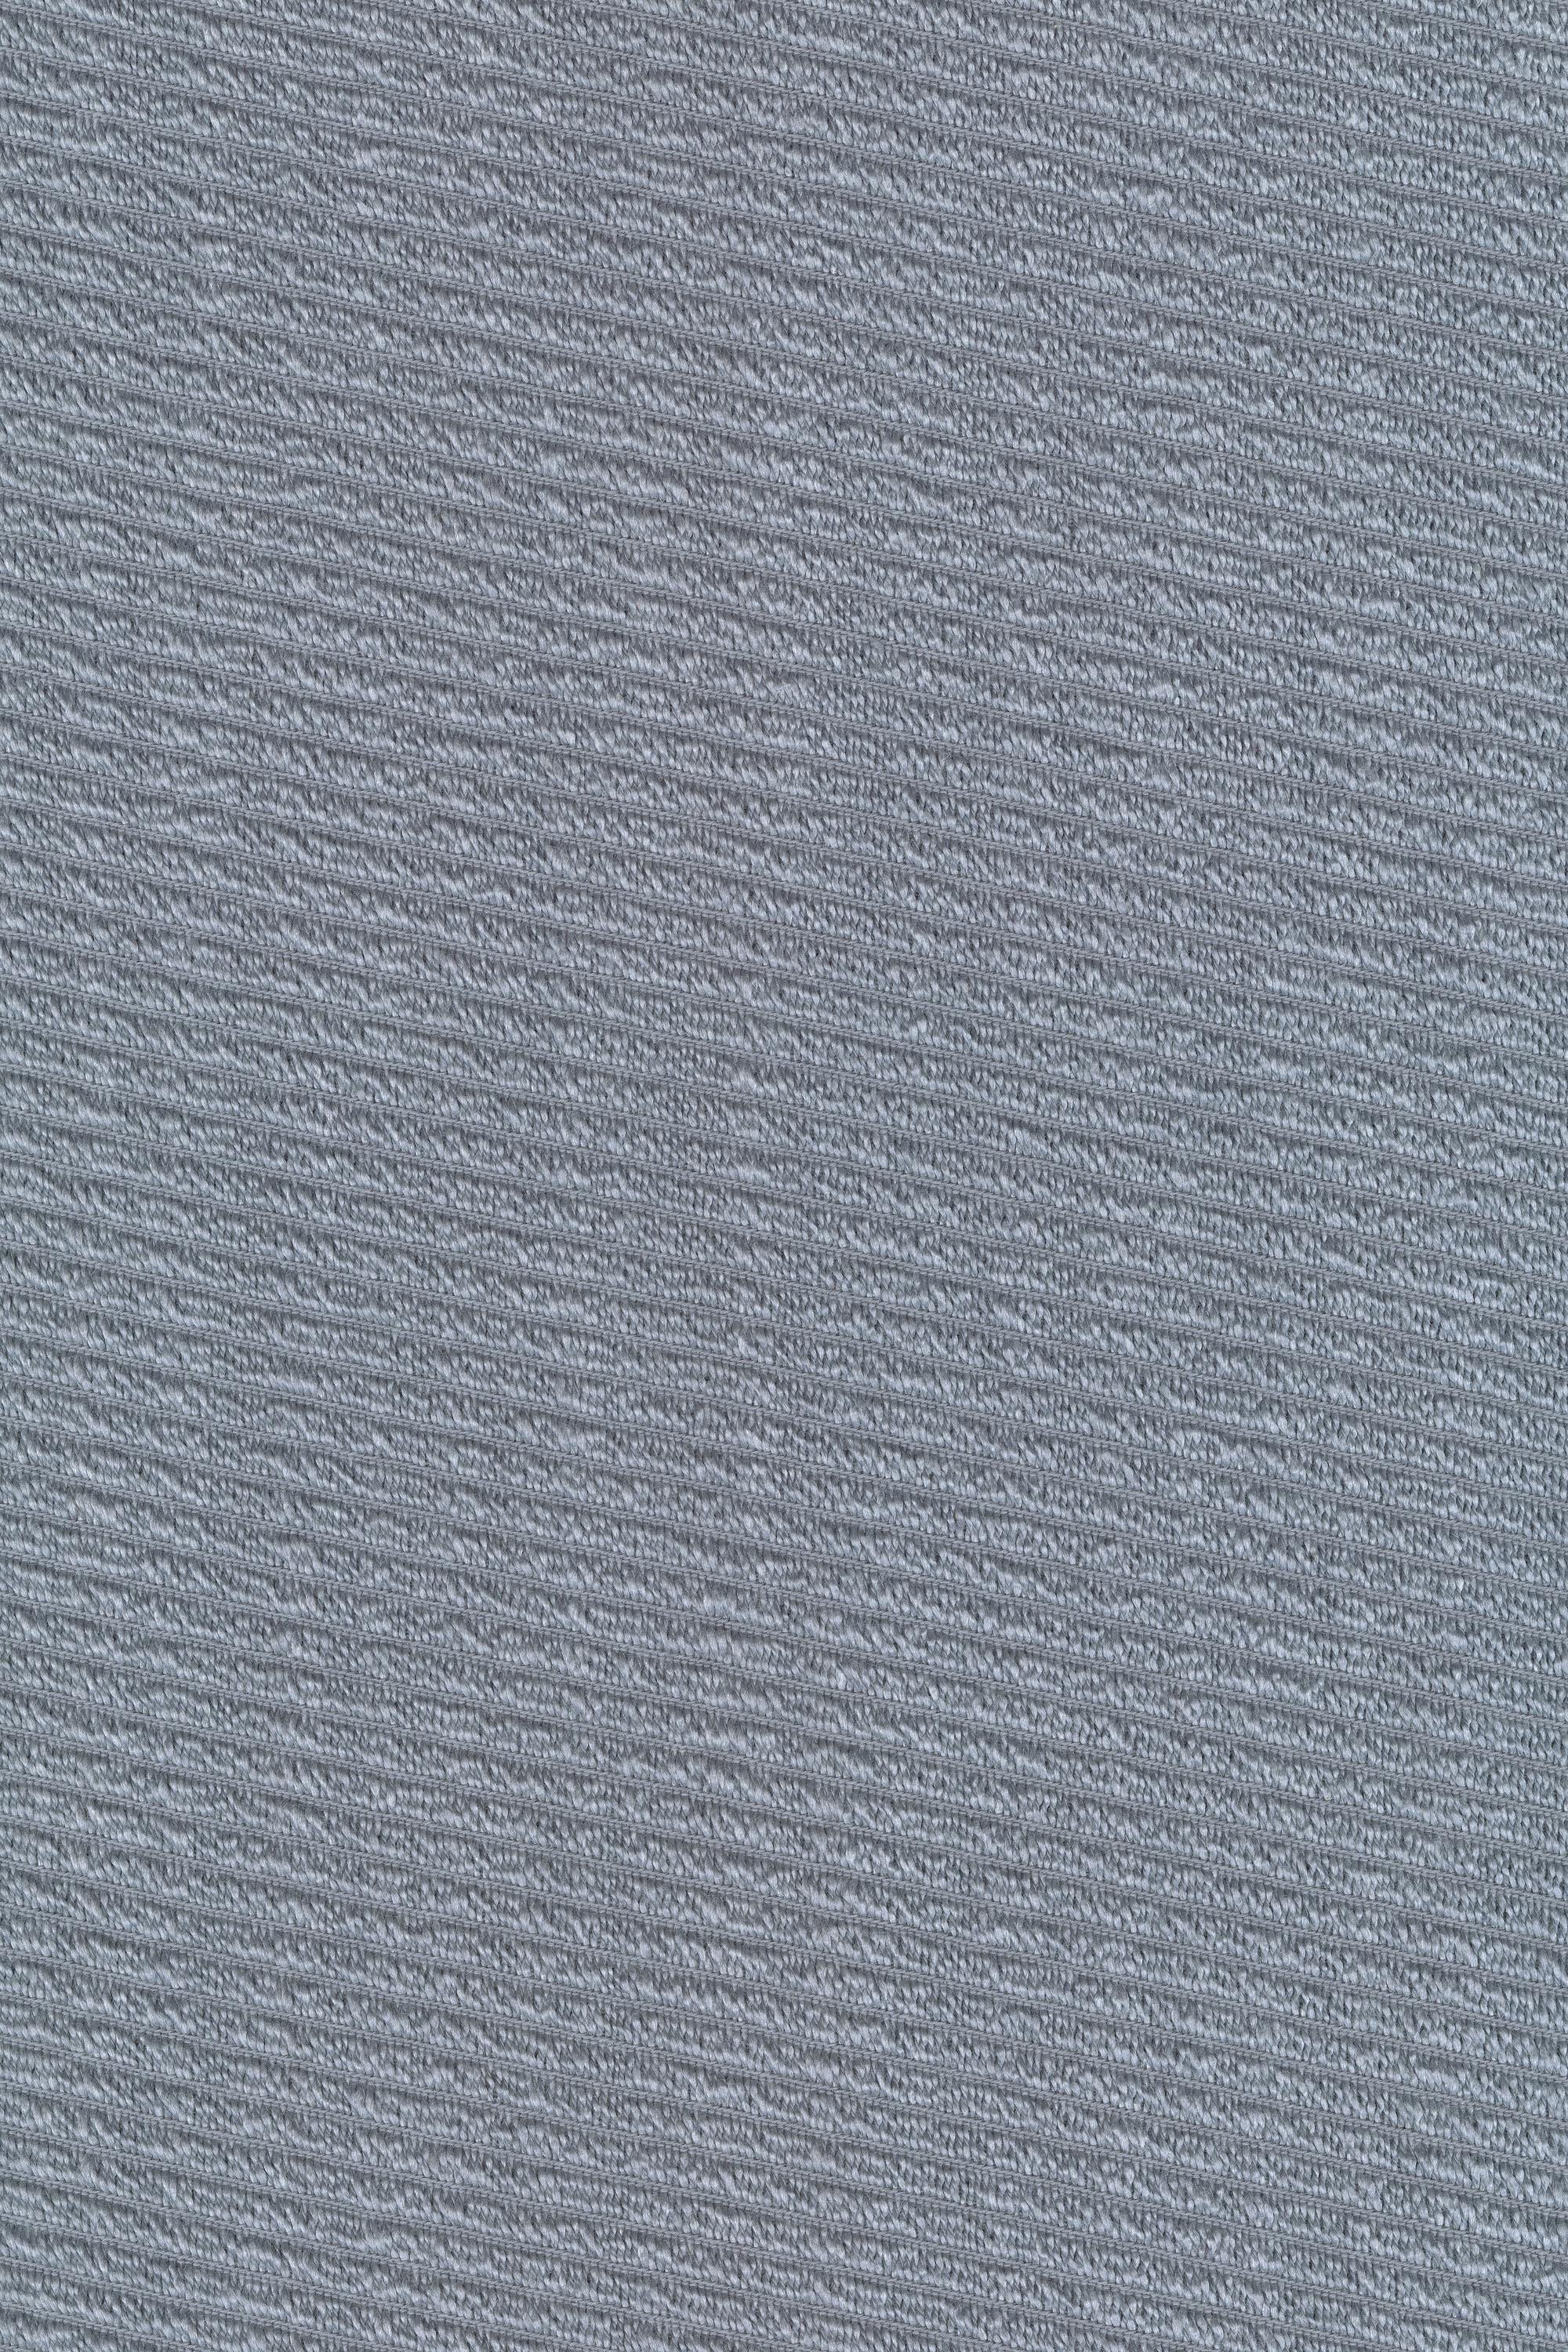 Kvadrat Aaren Upholstery Fabric 0133 by Raf Simons